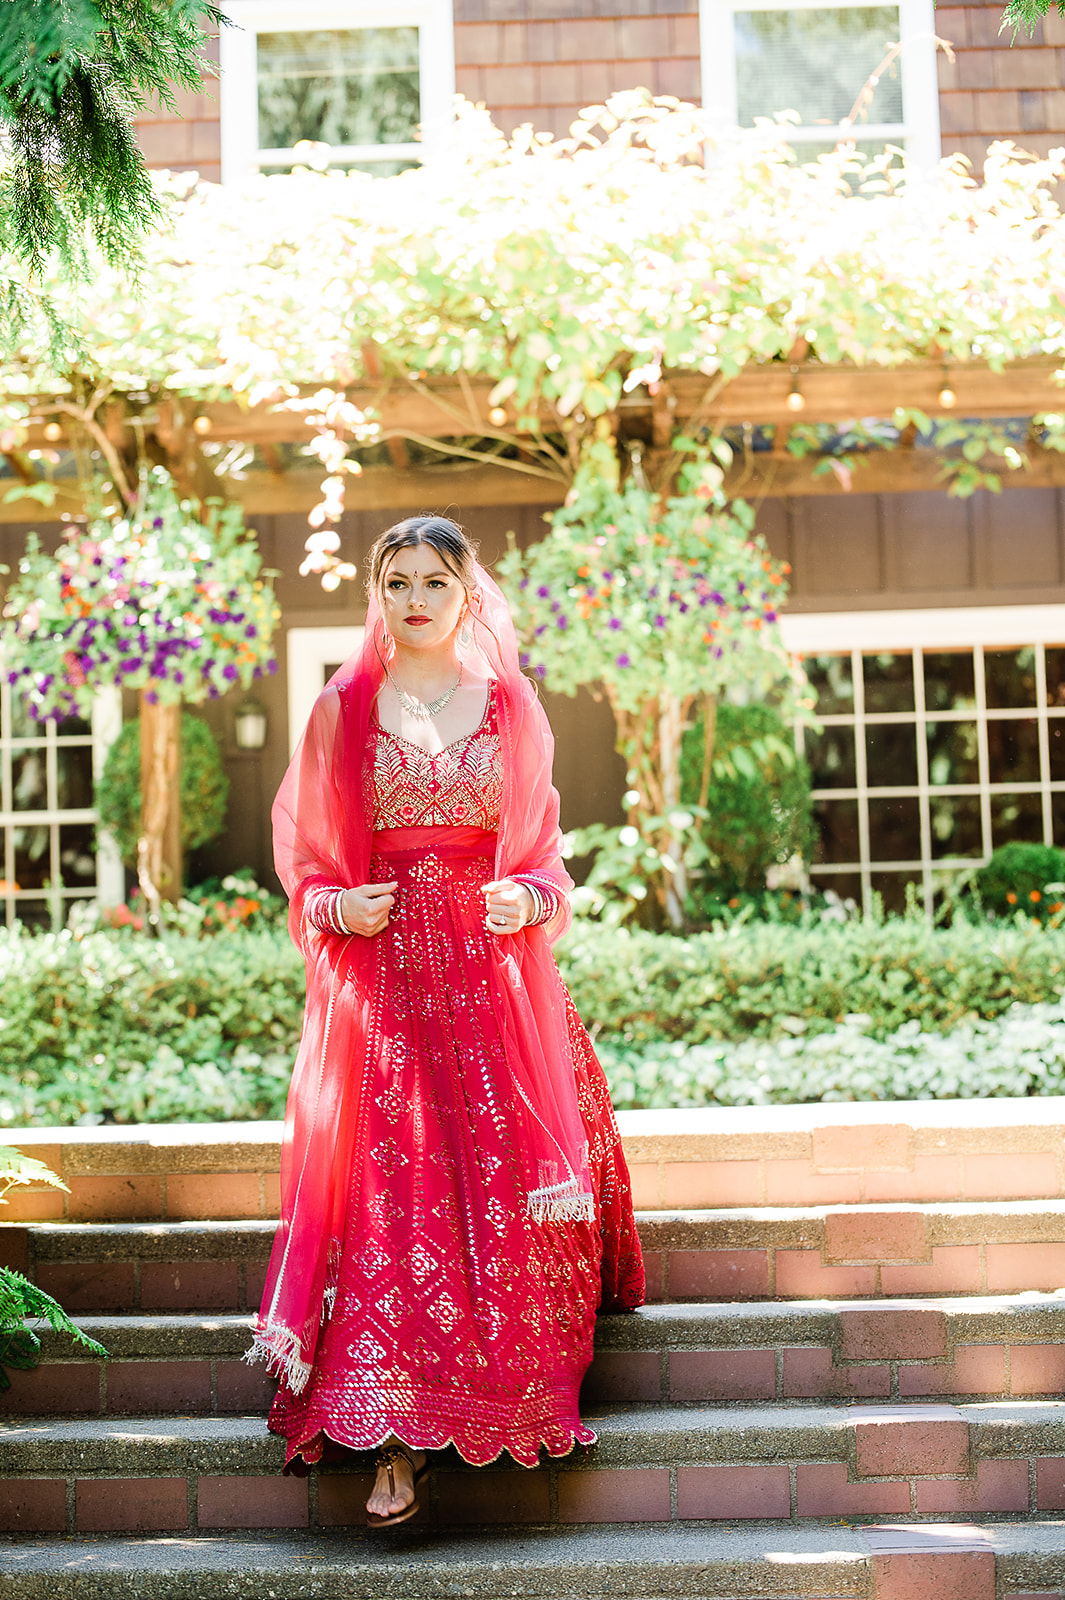 Seattle Hindu Wedding, Hindu Wedding Seattle, Seattle Wedding Photographer, Captured by Candace Photography